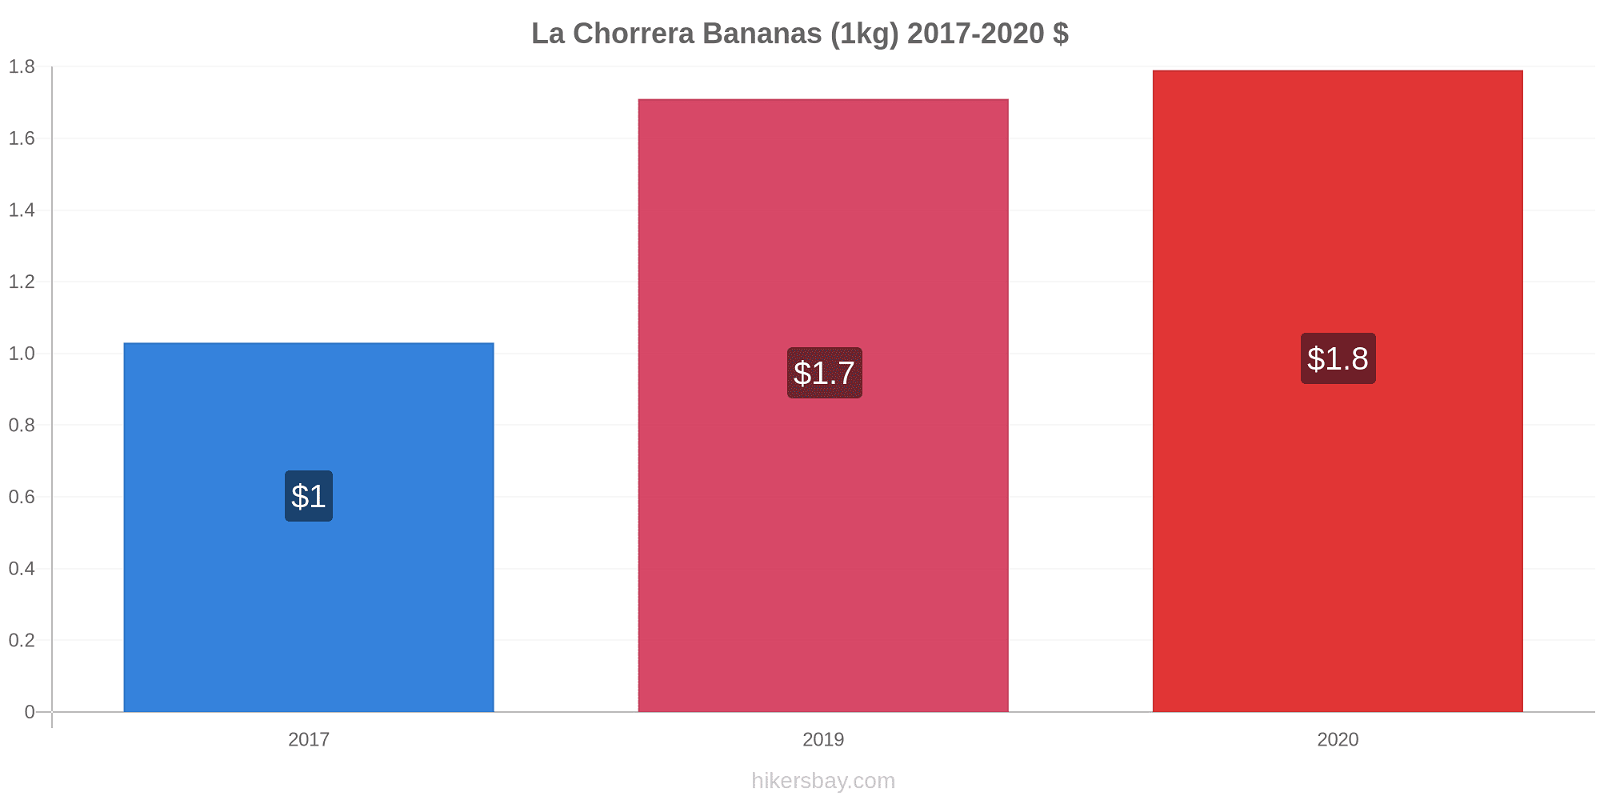 La Chorrera price changes Bananas (1kg) hikersbay.com